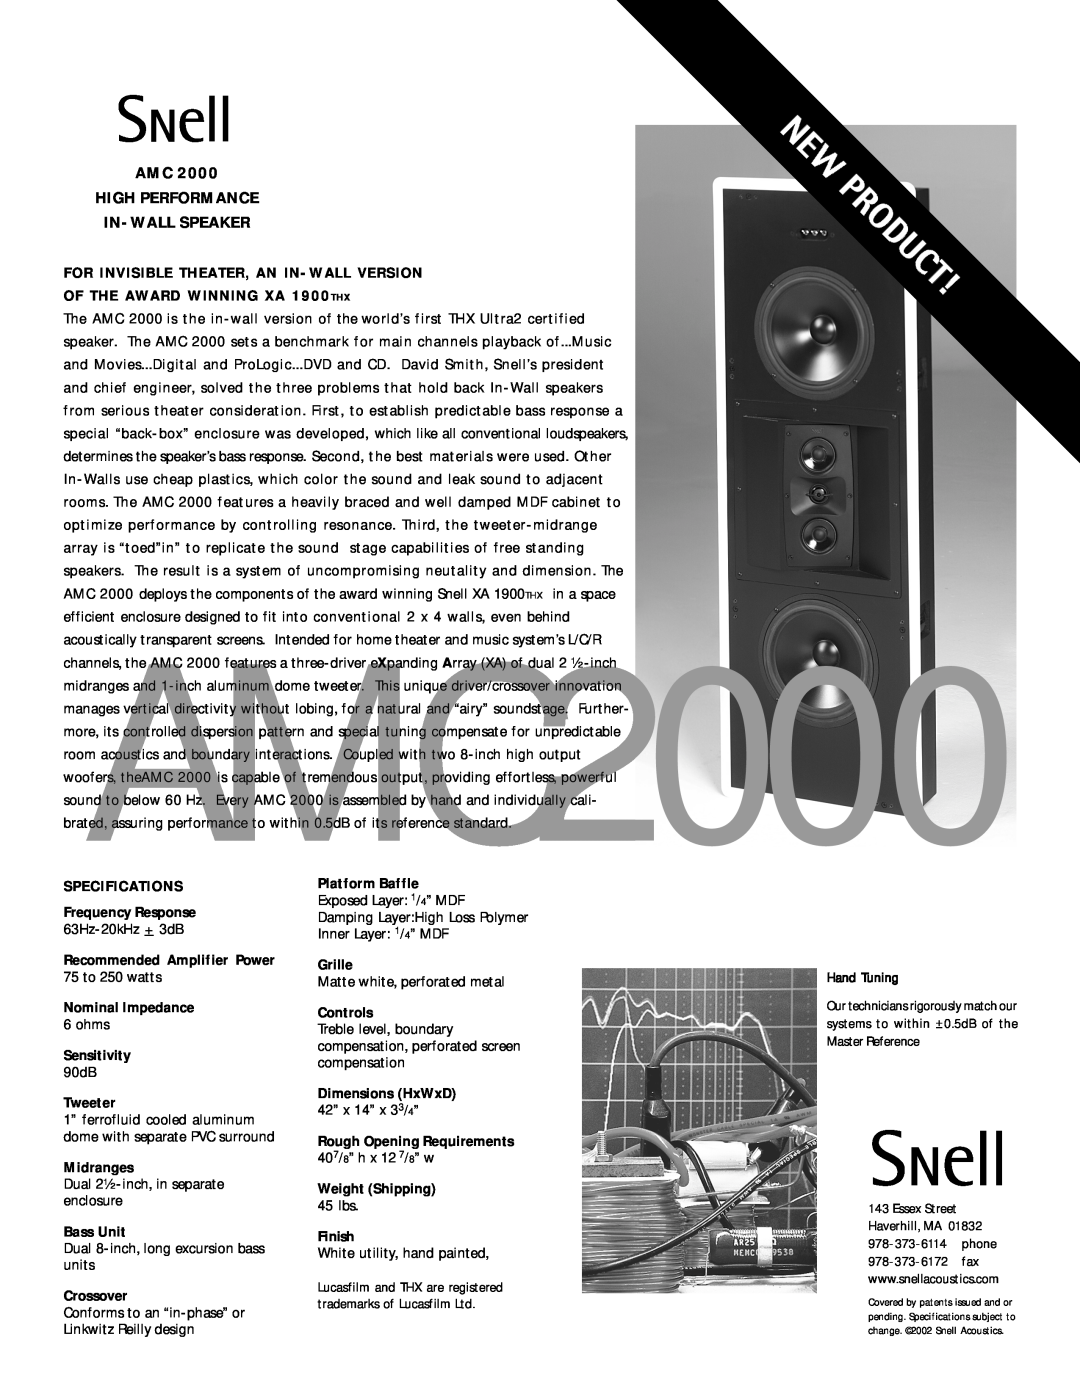 Snell Acoustics AMC 2000 specifications Amc High Performance In-Wallspeaker 